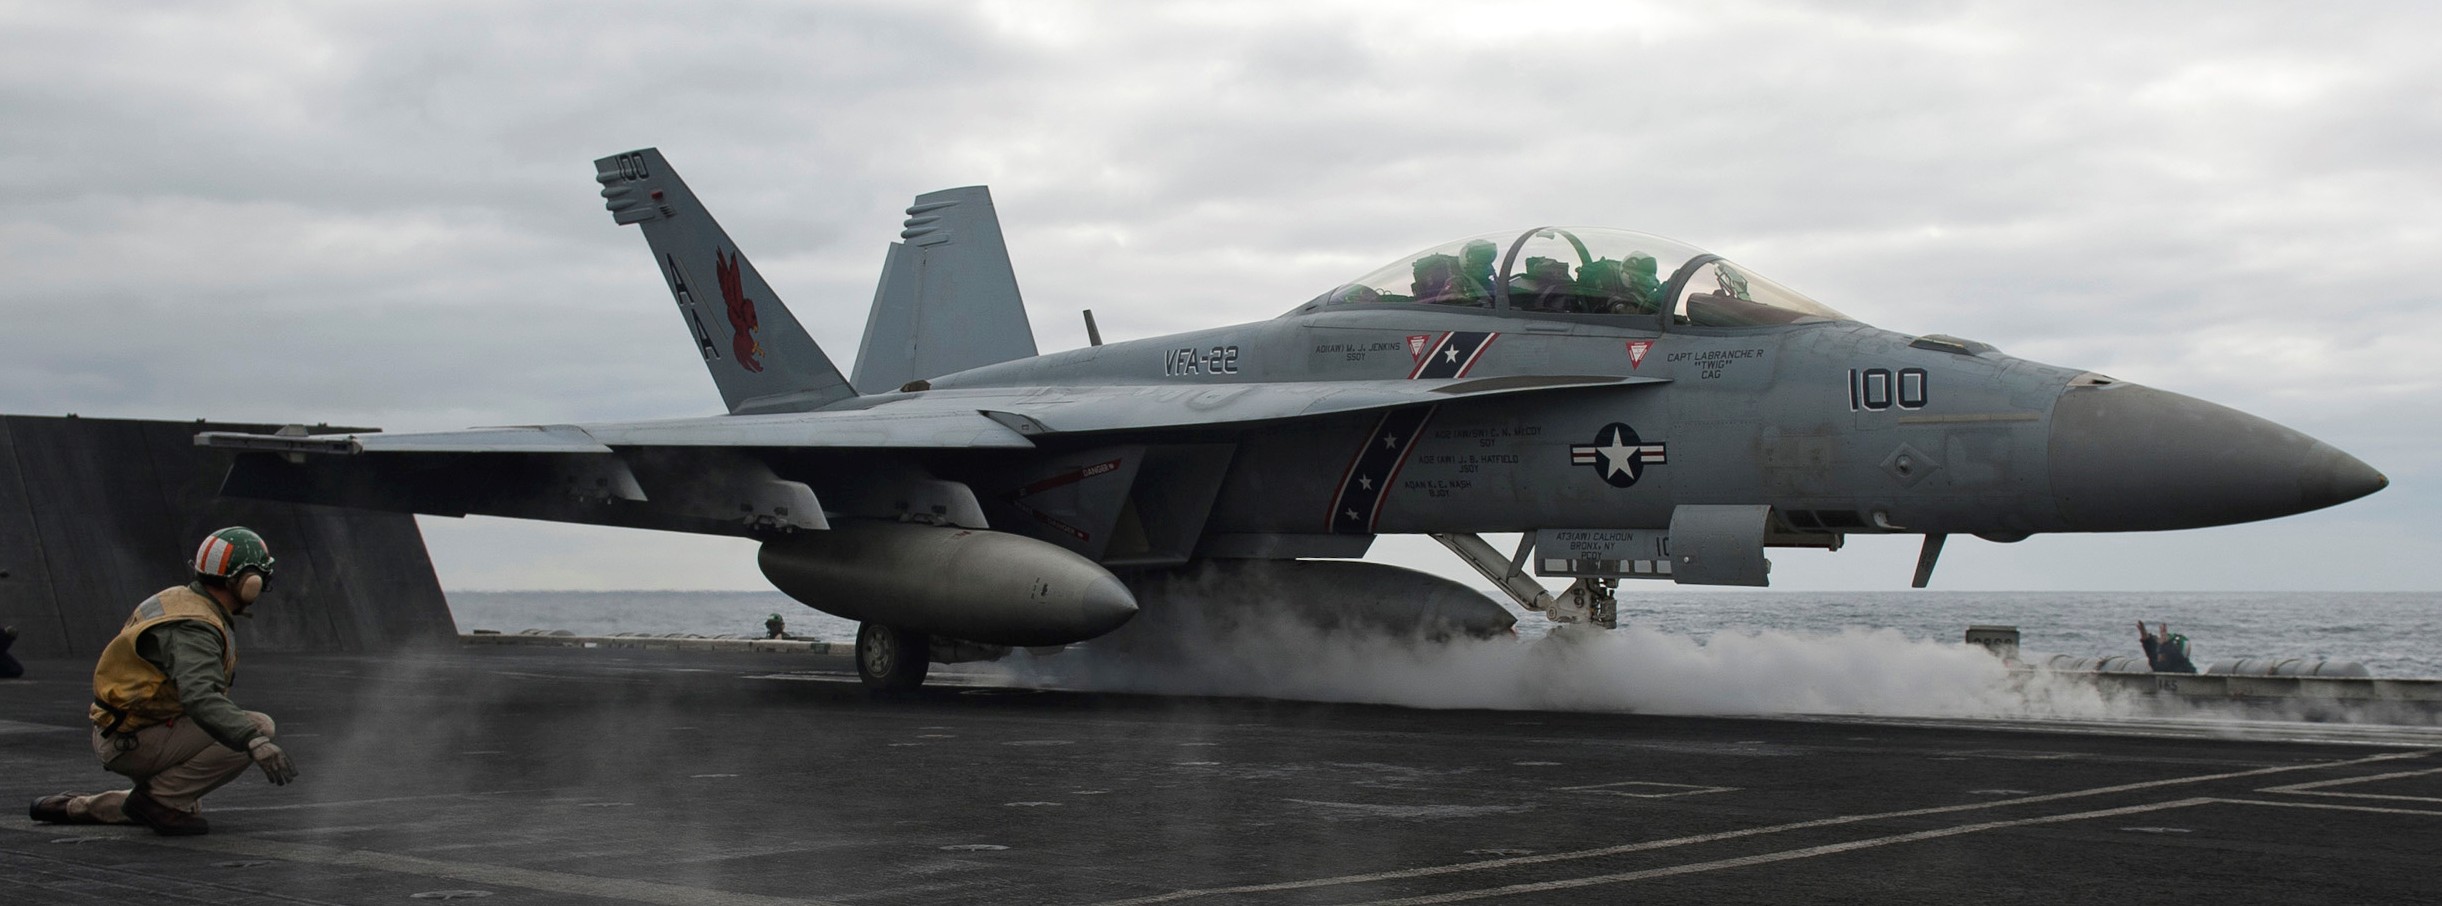 vfa-22 fighting redcocks strike fighter squadron f/a-18f super hornet cvn-70 uss carl vinson cvw-17 us navy 65p